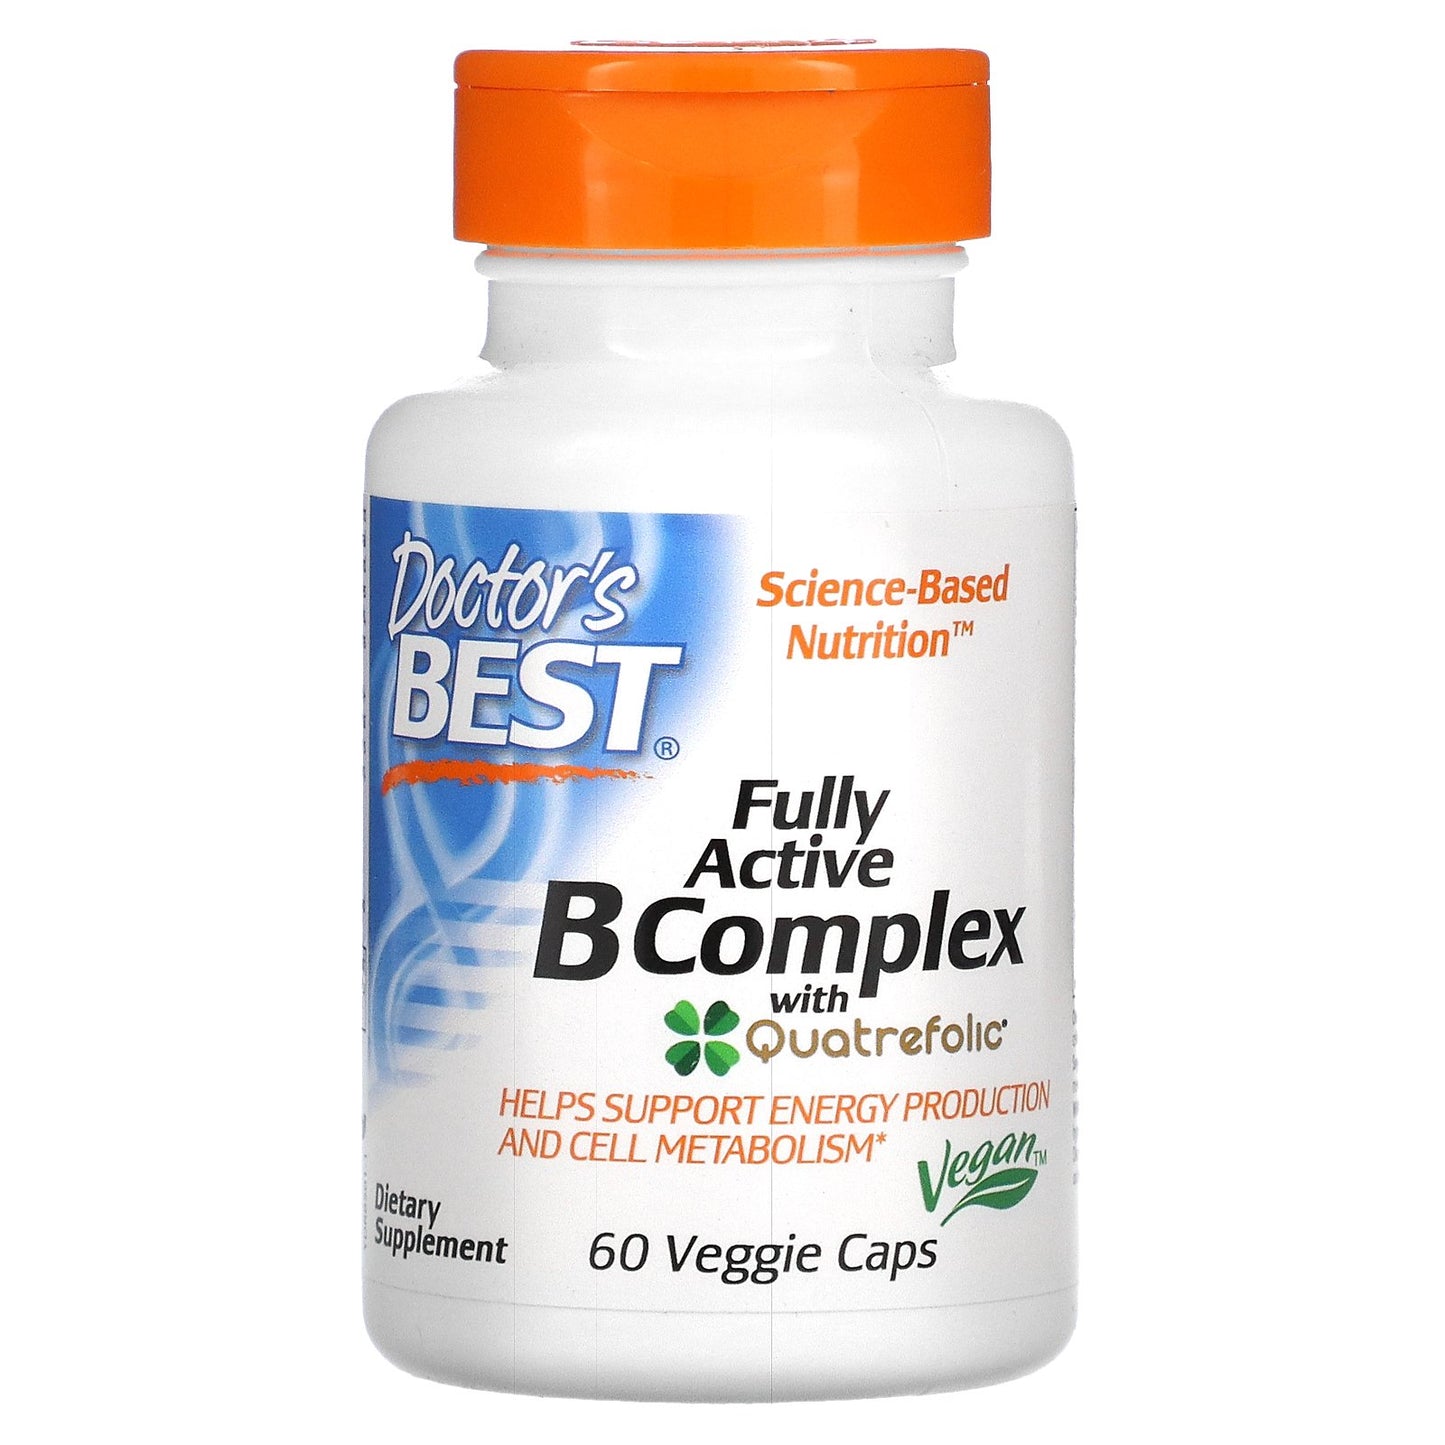 Doctor's Best Fully Active B Complex with Quatrefolic, 60 Veggie Caps